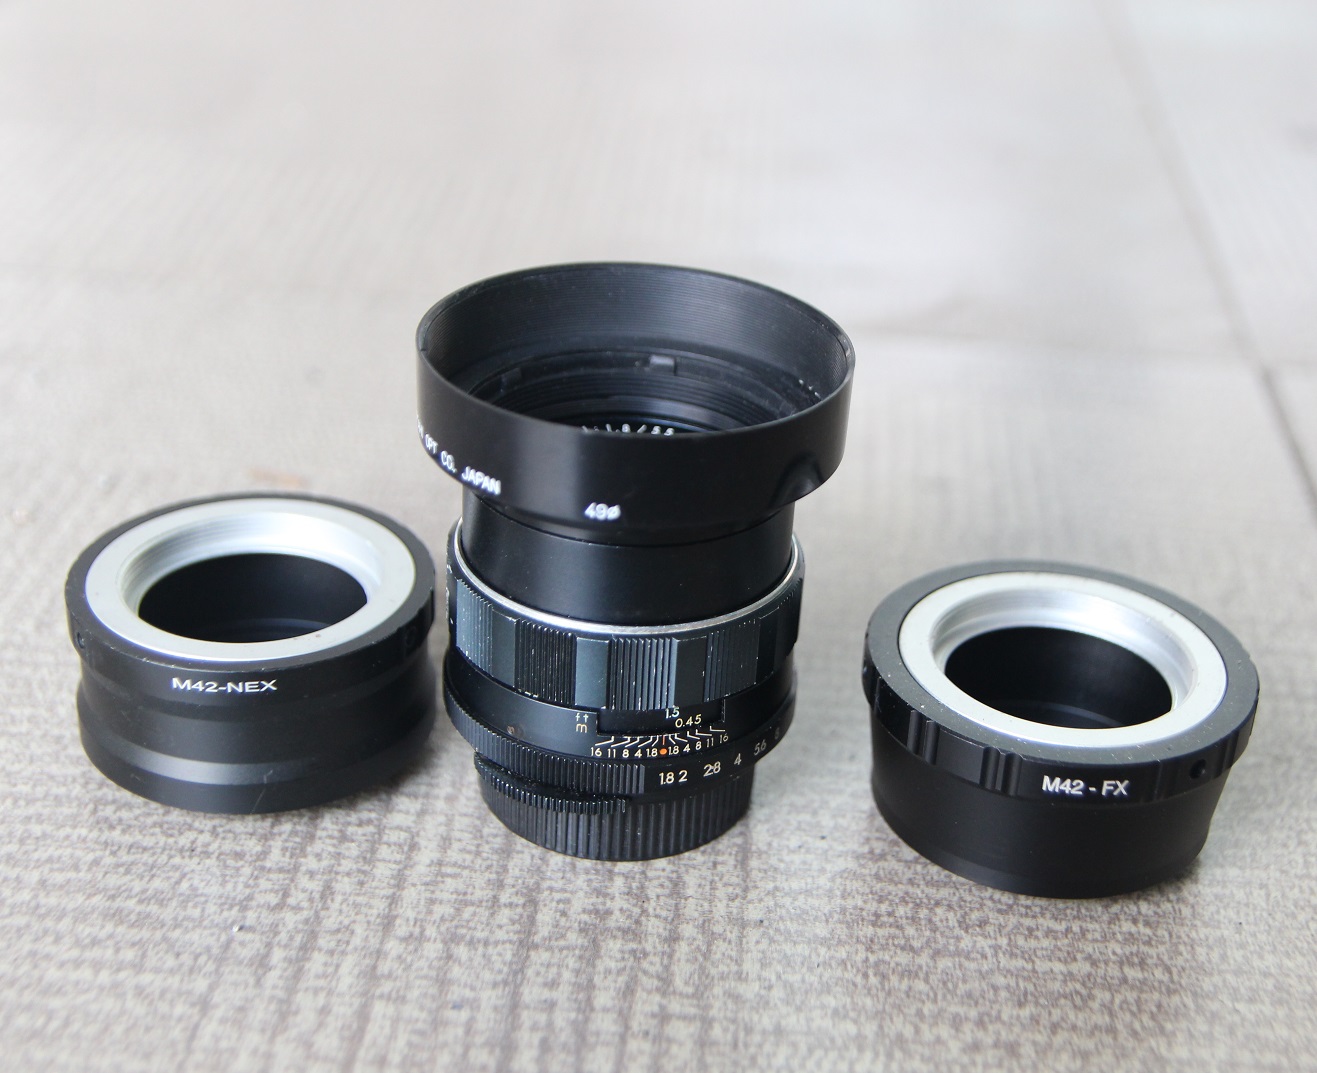 Lensa Takumar 55mm f1.8 Manual | Jual Beli Laptop Second dan Kamera